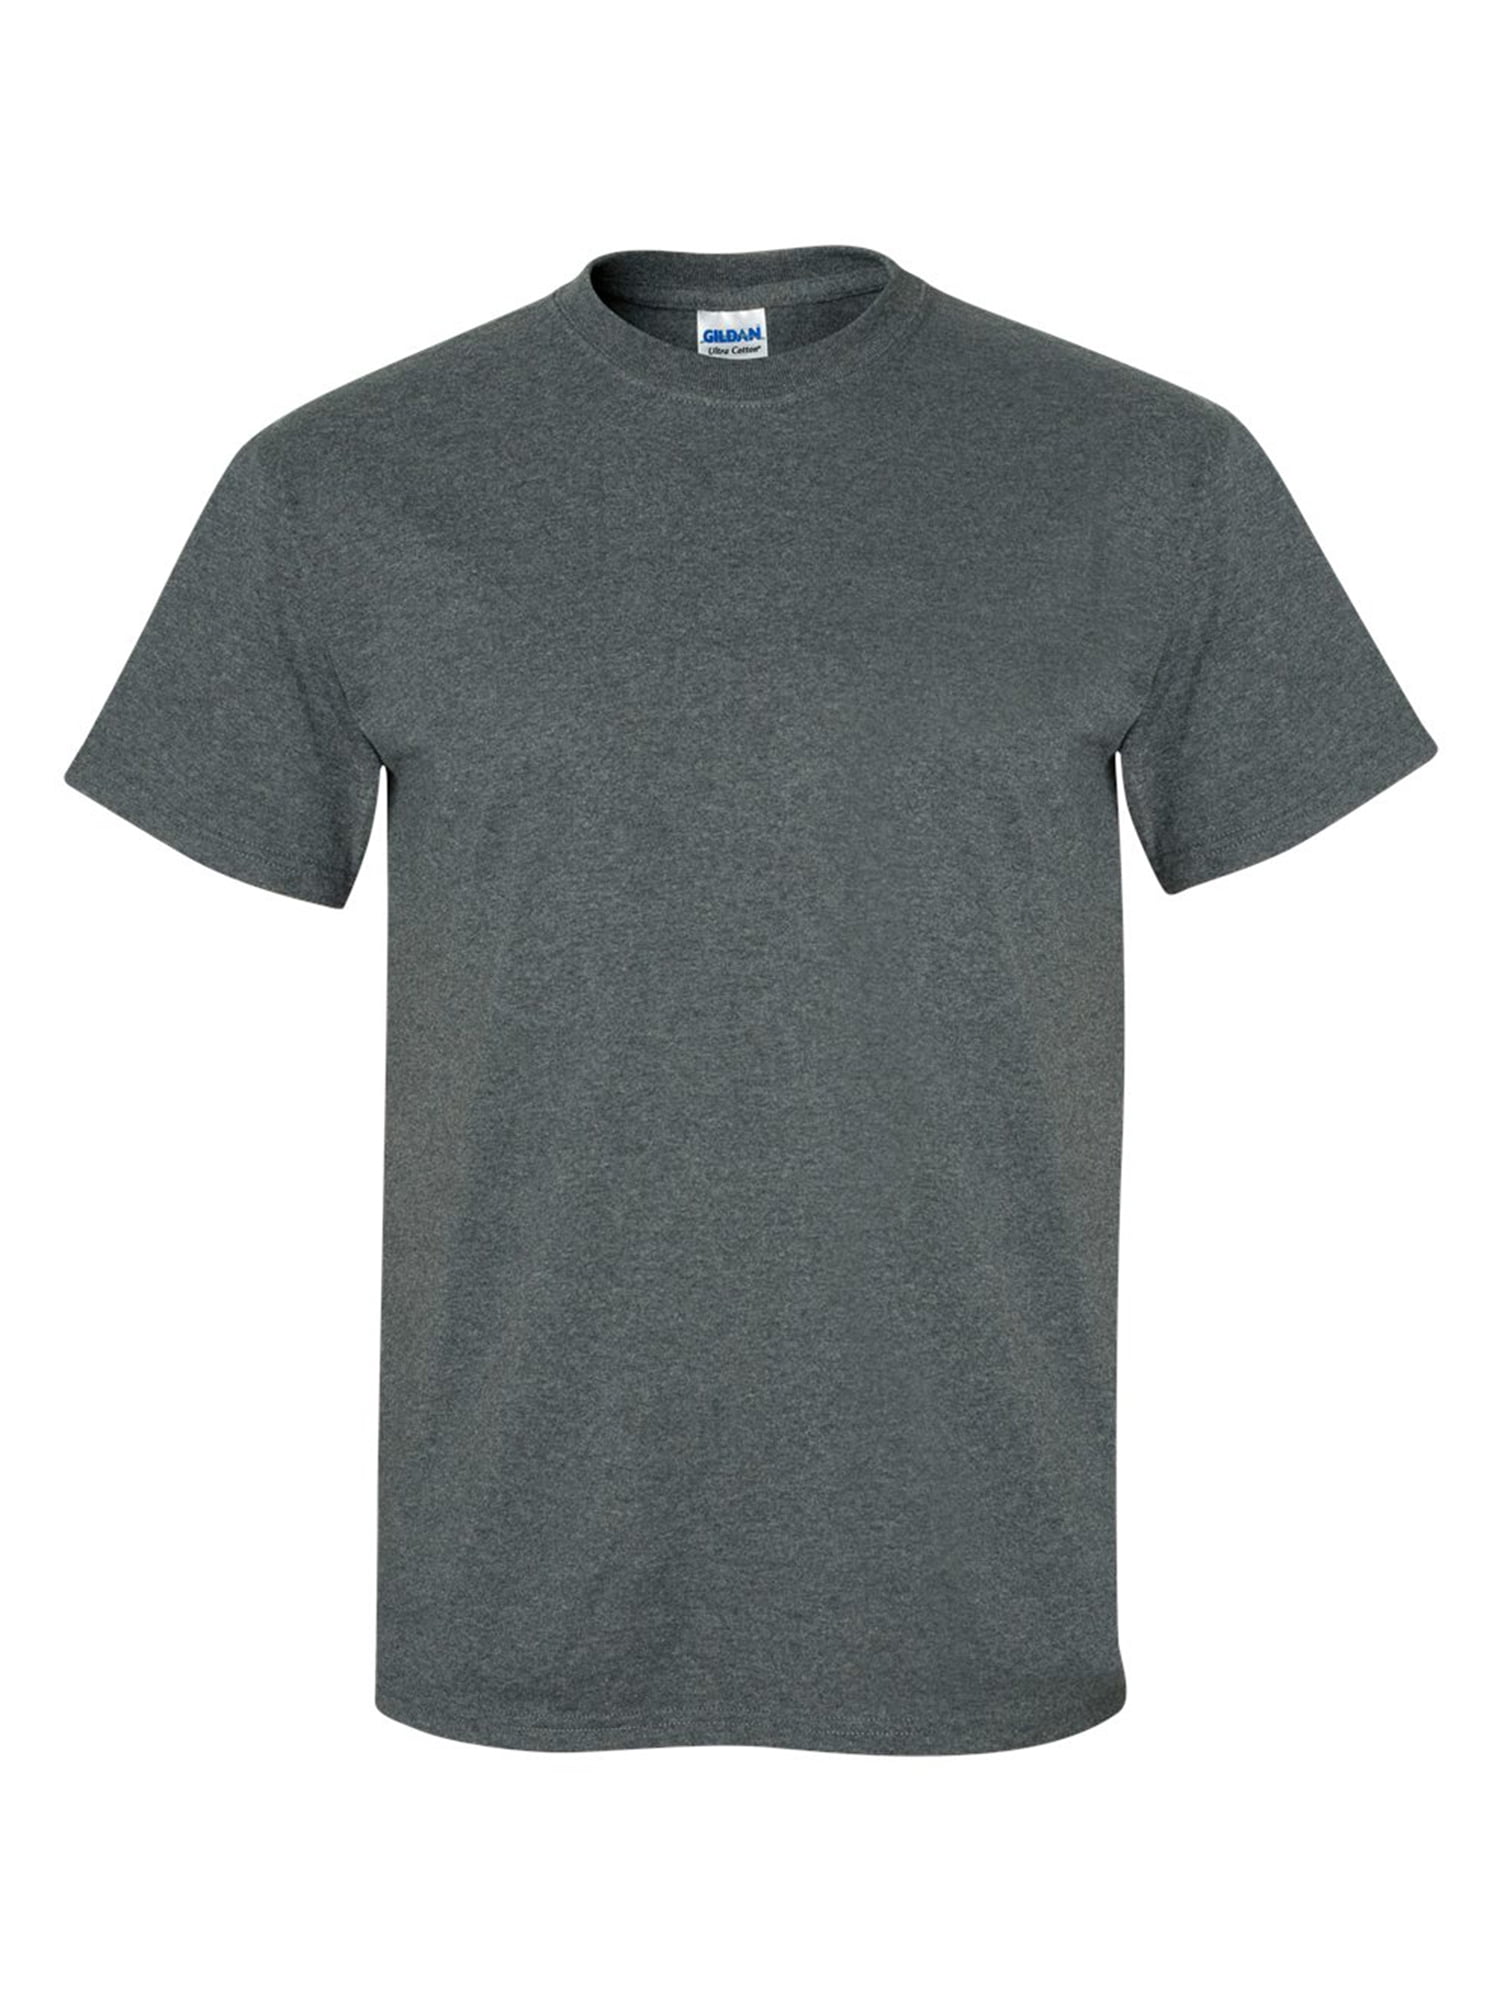 Dark Heather T-Shirts for Men - Gildan 2000 - Men Shirt Cotton Grey Men ...